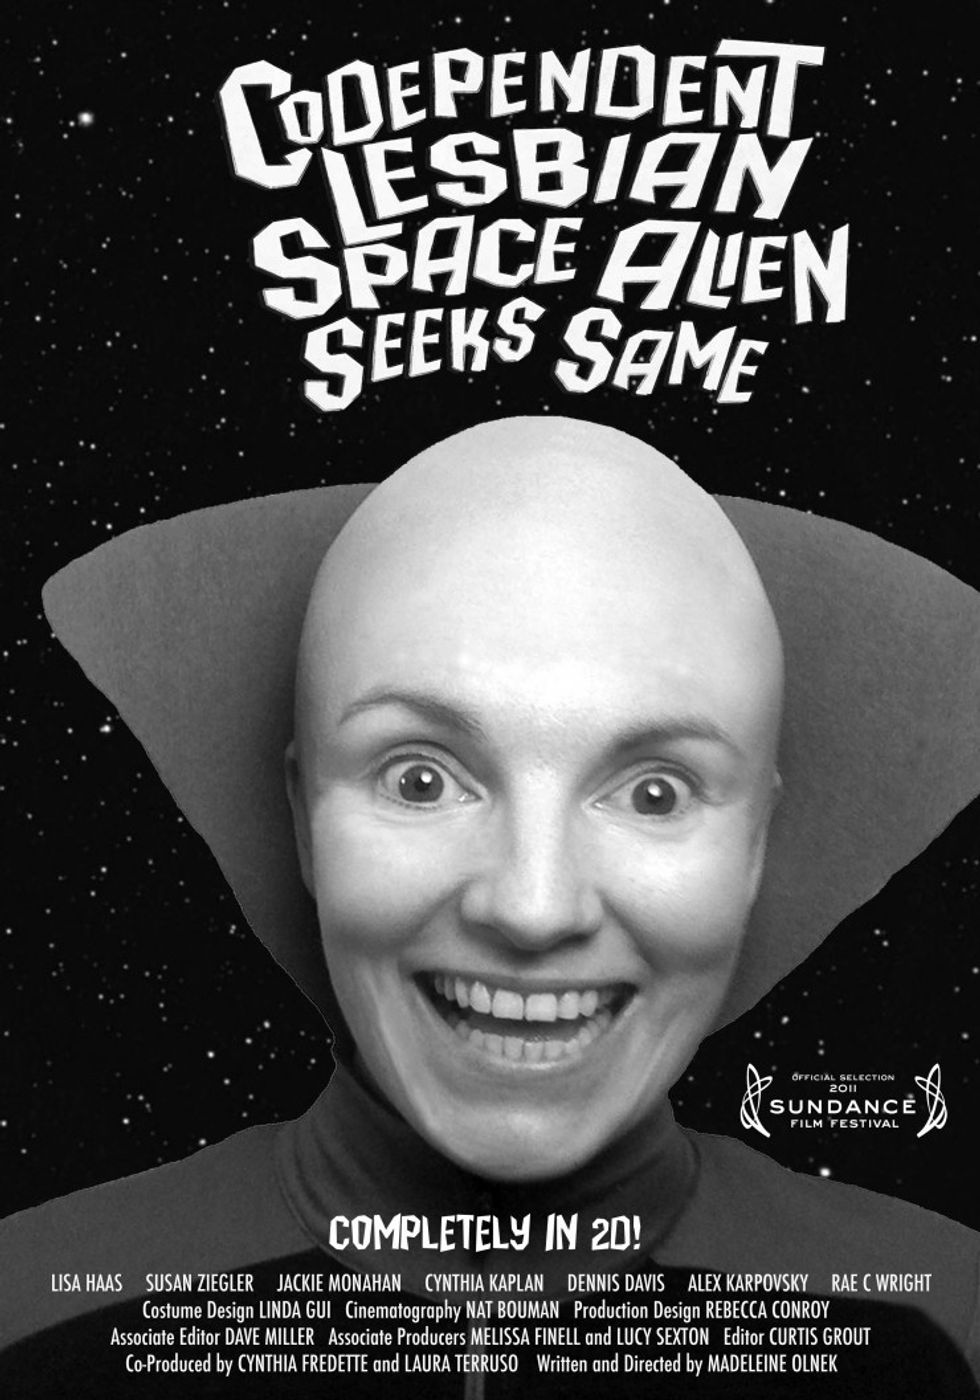 Codependent-lesbian-space-alien-seeks-same